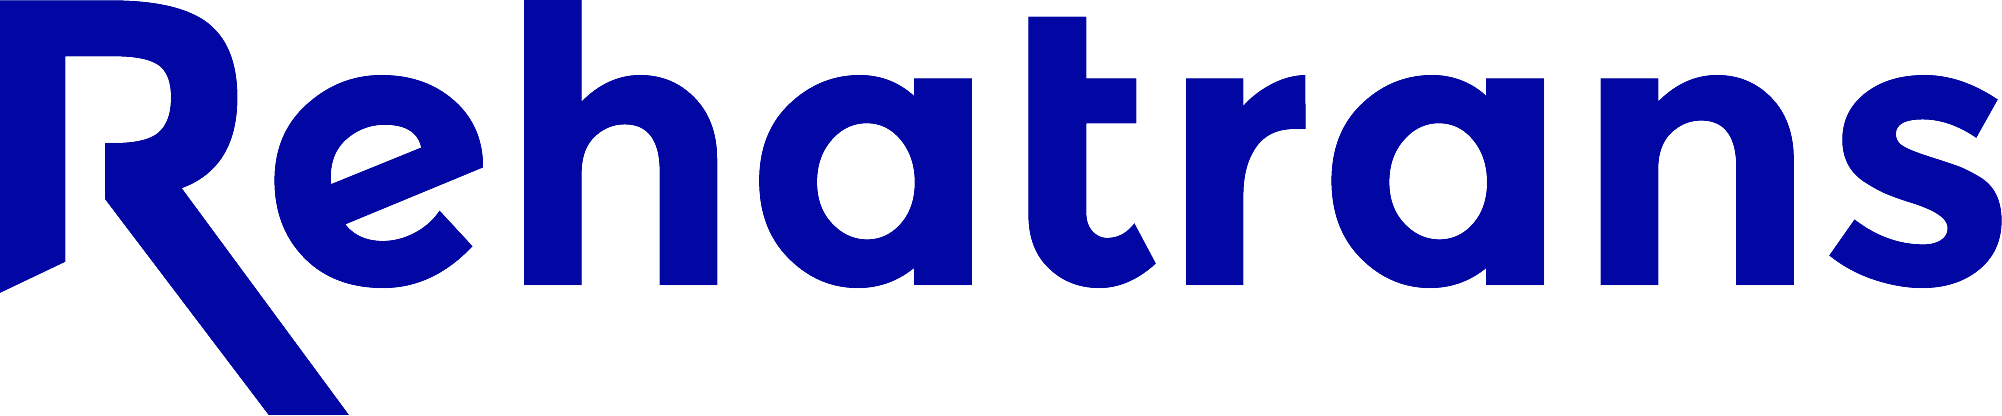 rehatrans logo